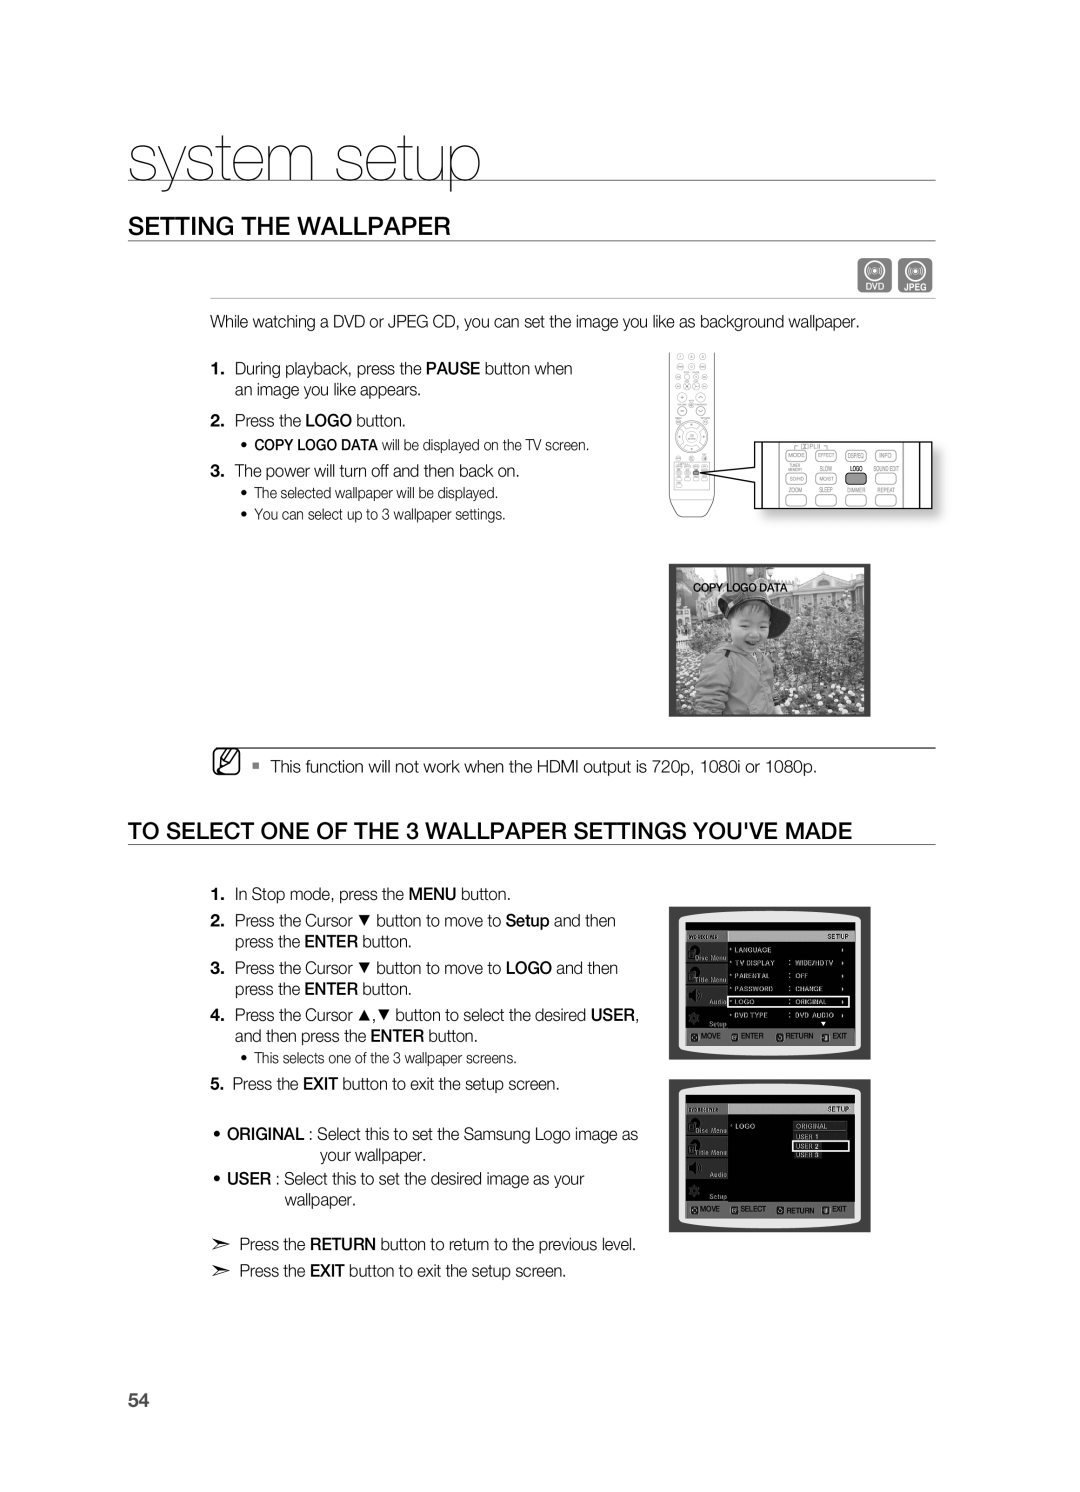 Samsung HT-TZ312, HT-Z310 manual SEttinG tHE WaLLPaPEr, system setup 